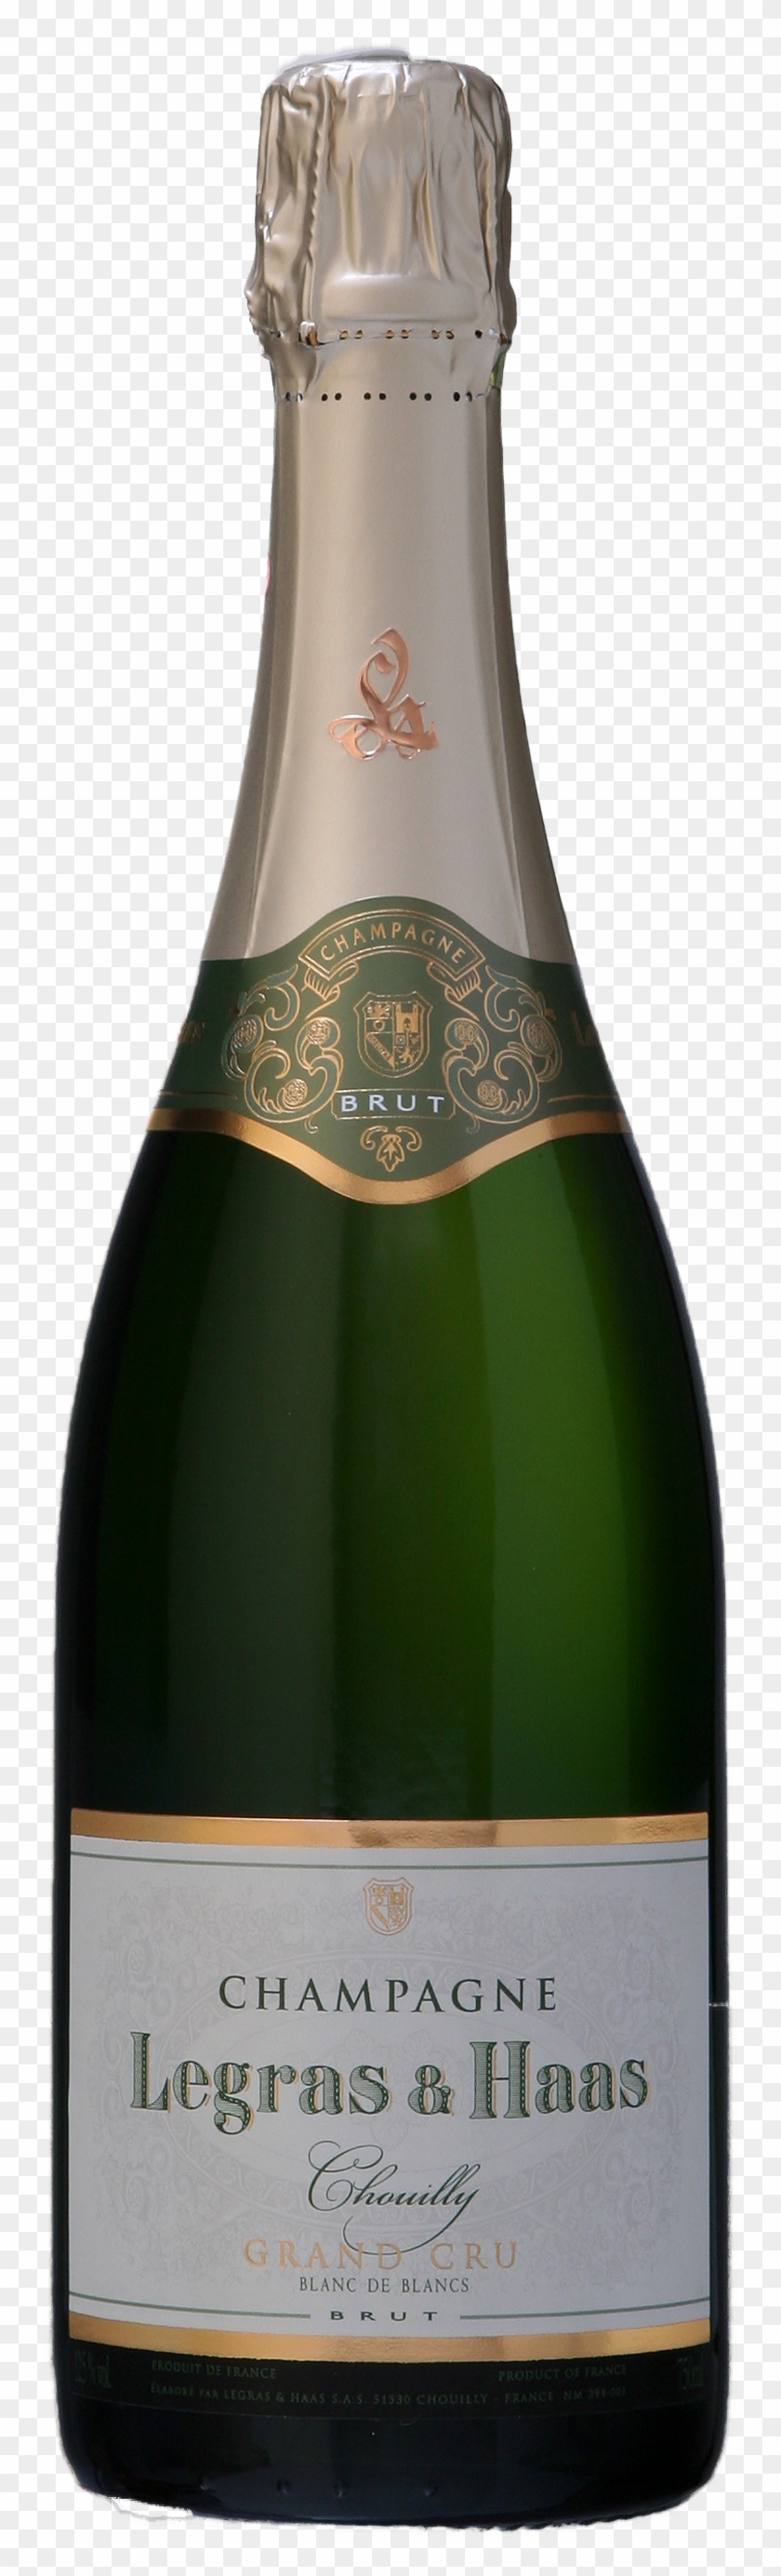 Legras & Haas Chouilly Grand Cru Brut Blanc De Blancs - Wine Bottle Clipart #926134